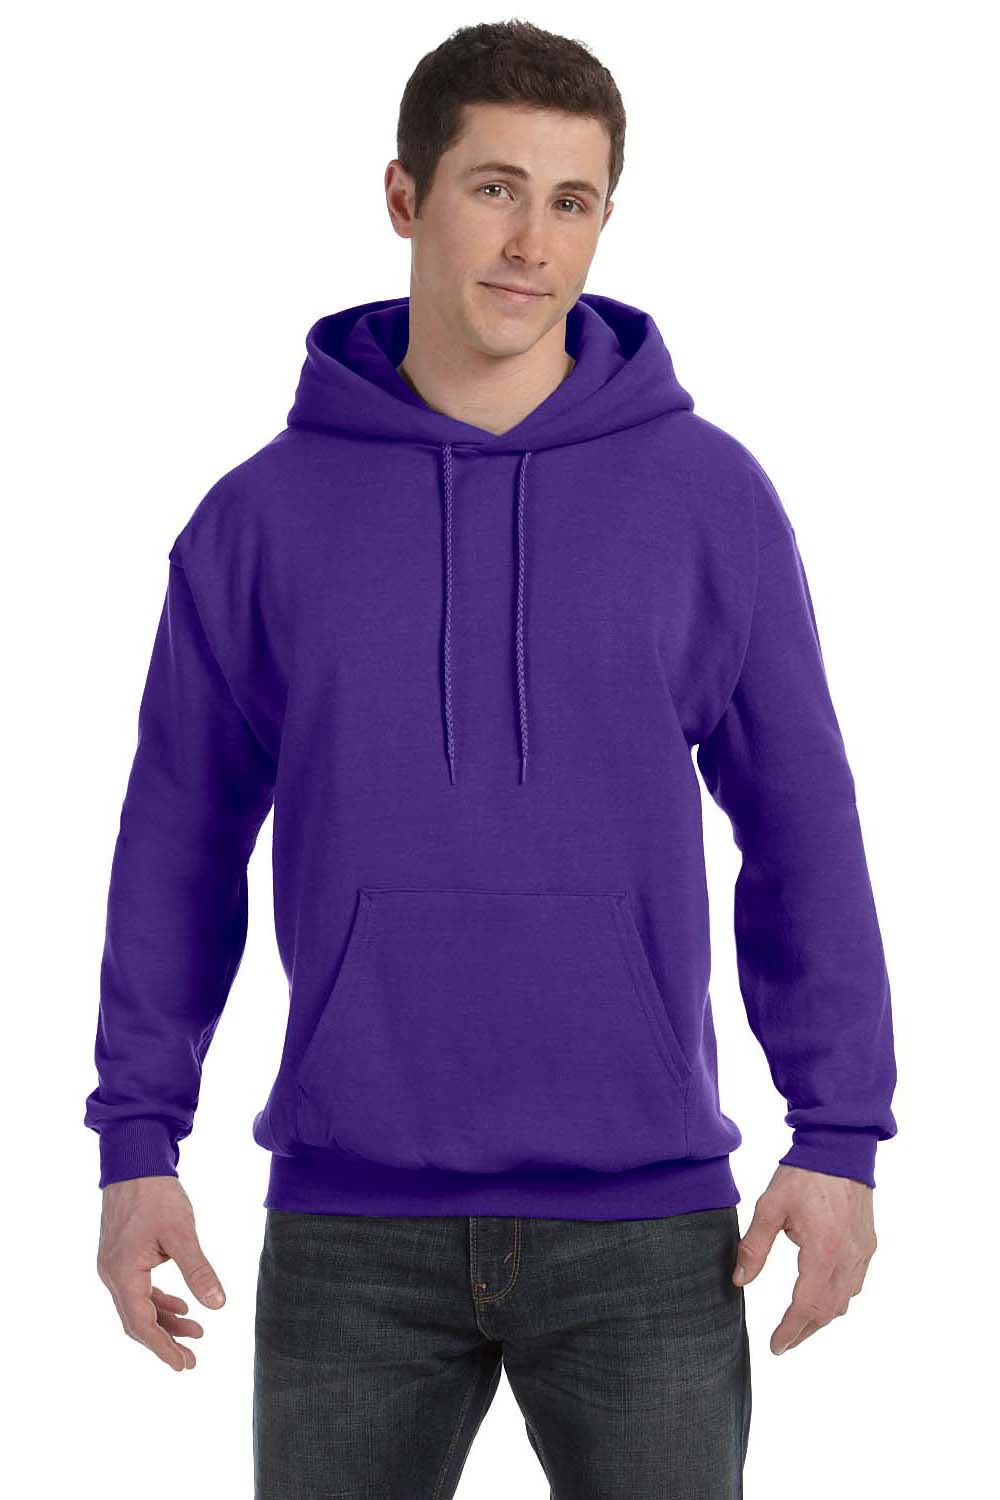 Hanes P170 Mens EcoSmart Print Pro XP Hooded Sweatshirt Hoodie Purple Front